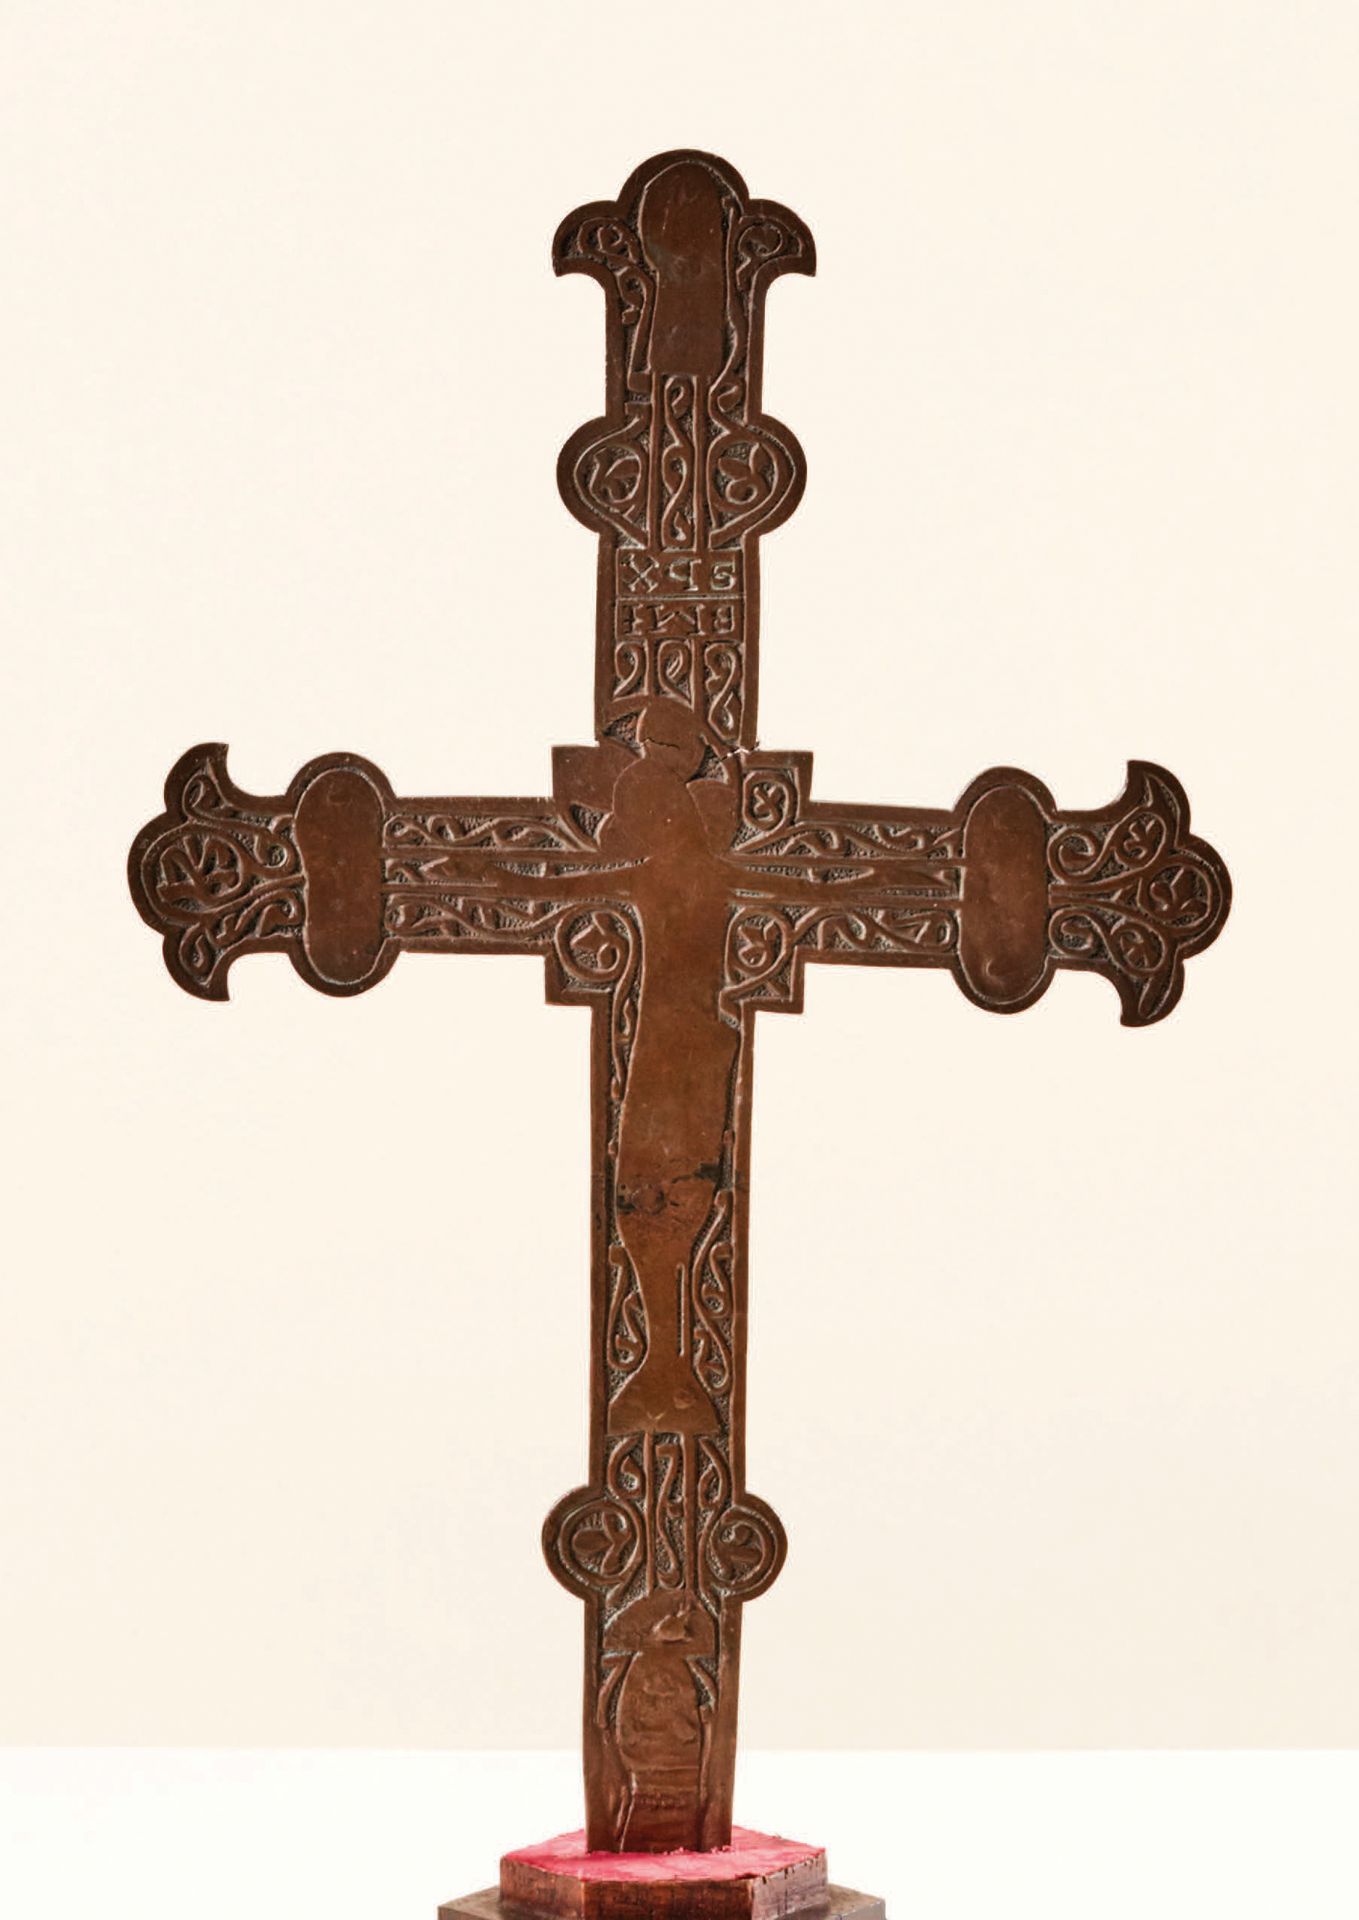 Null 祭坛上的十字架，有花，方形的十字架，由倒角和雕刻的铜制成。正面：基督和人物的预留部分，卷轴路线，带有基督XPS和IHS单字的标题；背面：枝条和卷轴两端&hellip;